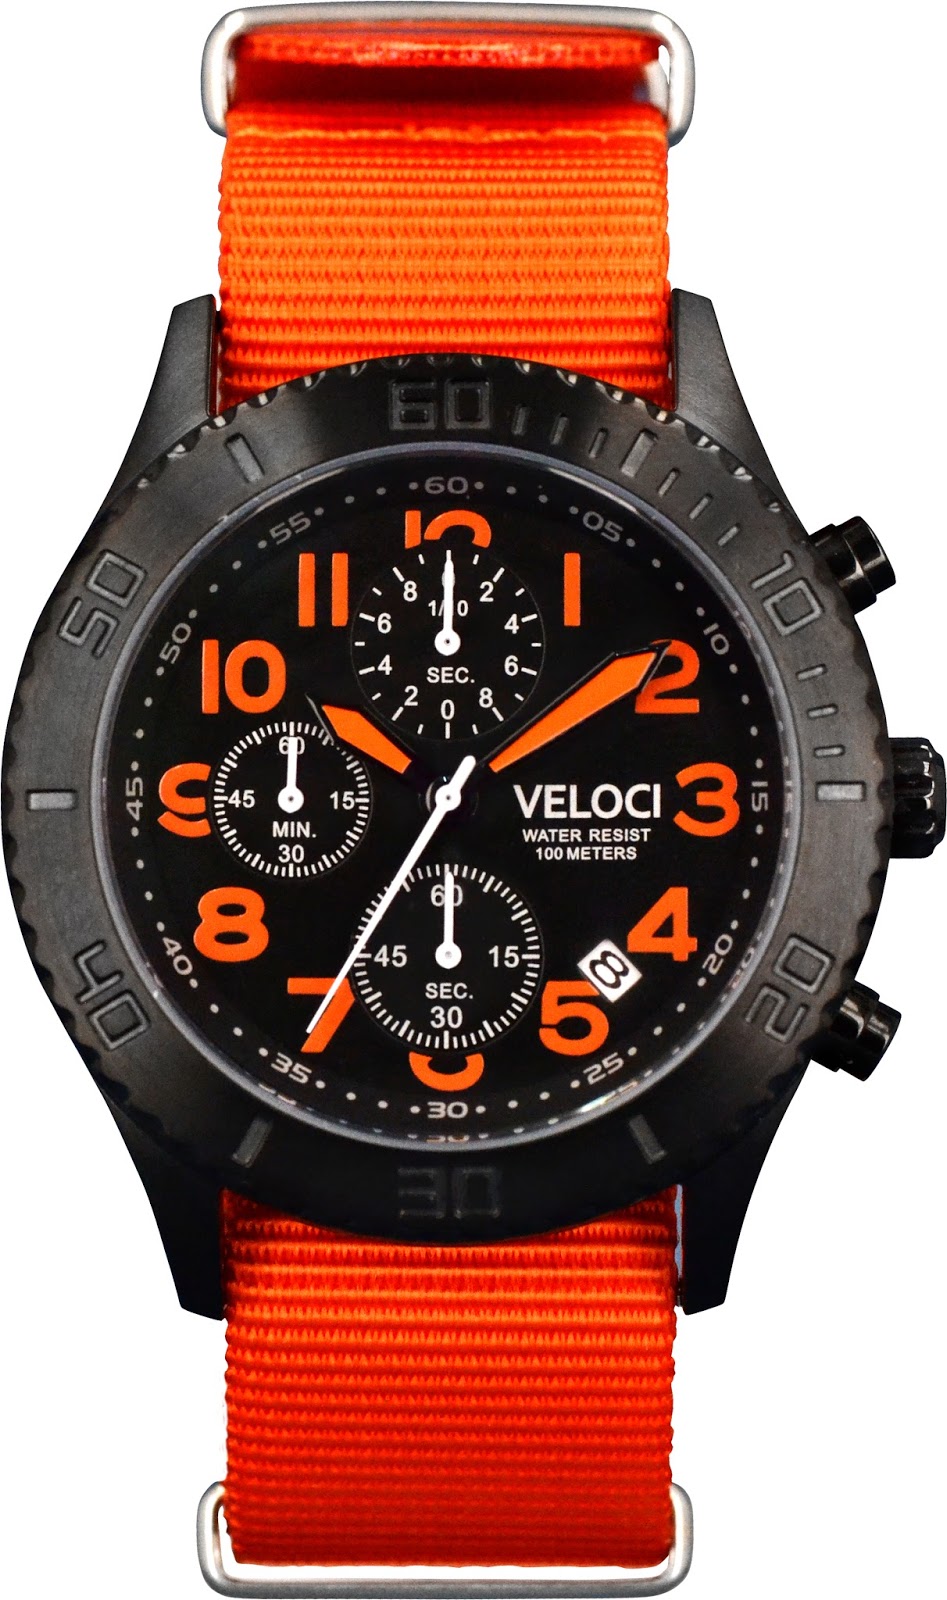 veloci voyager watch price